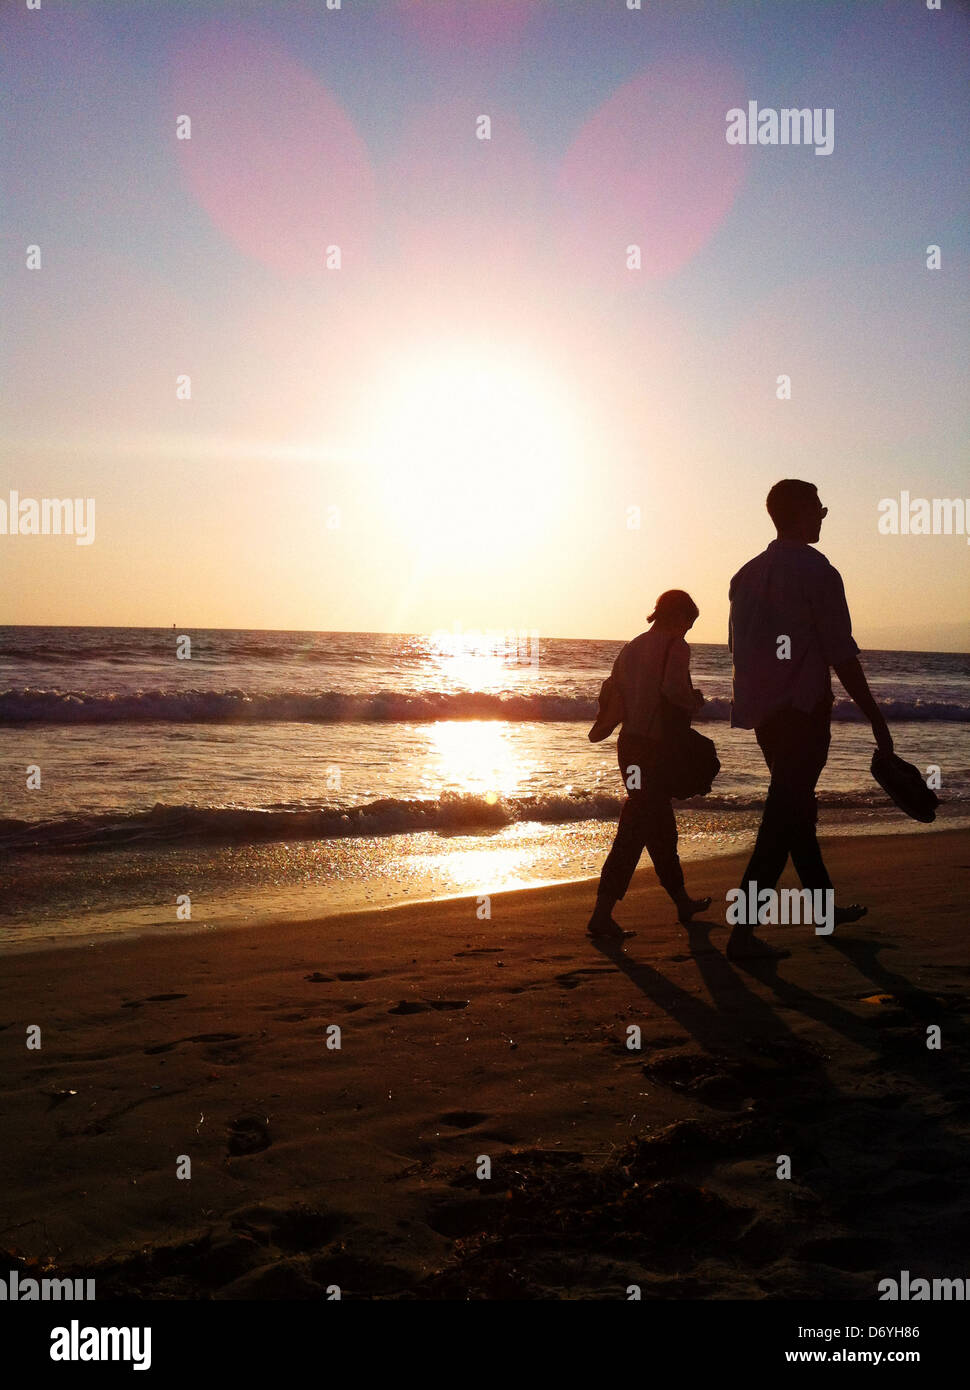 Silhouette de couple walking on beach at sunset Banque D'Images